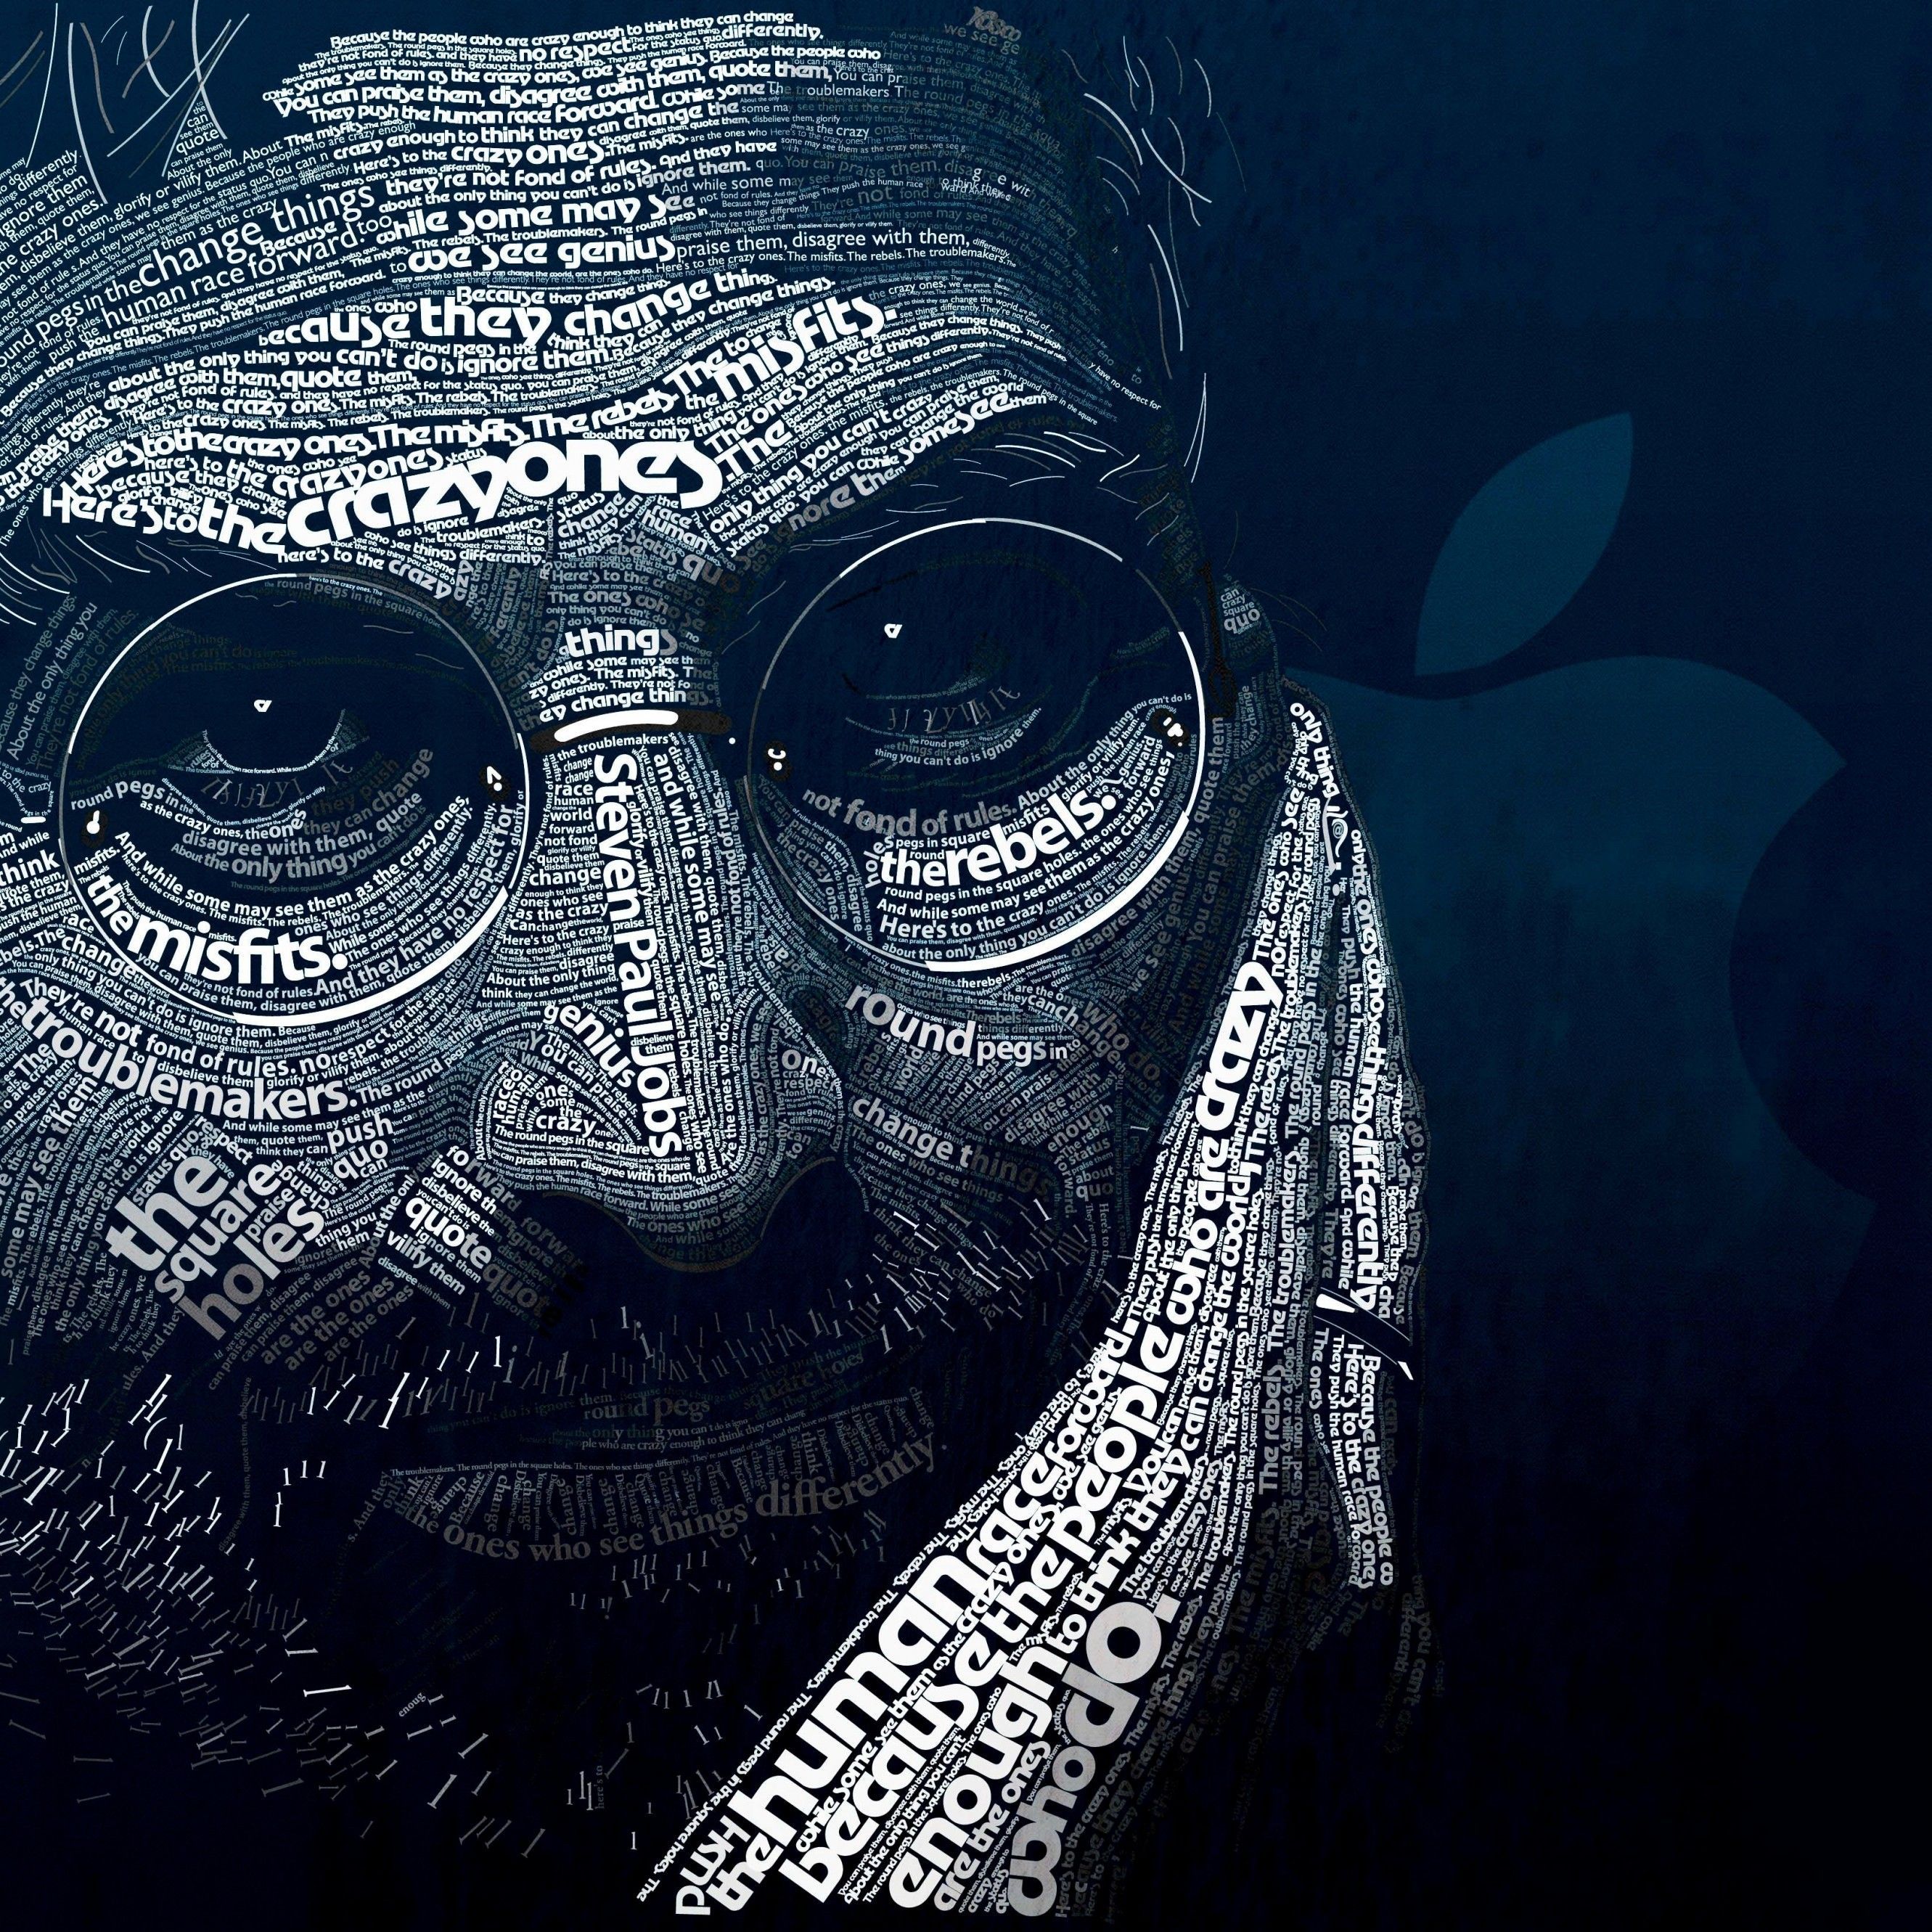 Download Steve Jobs Typographic Portrait HD wallpaper for iPhone 6